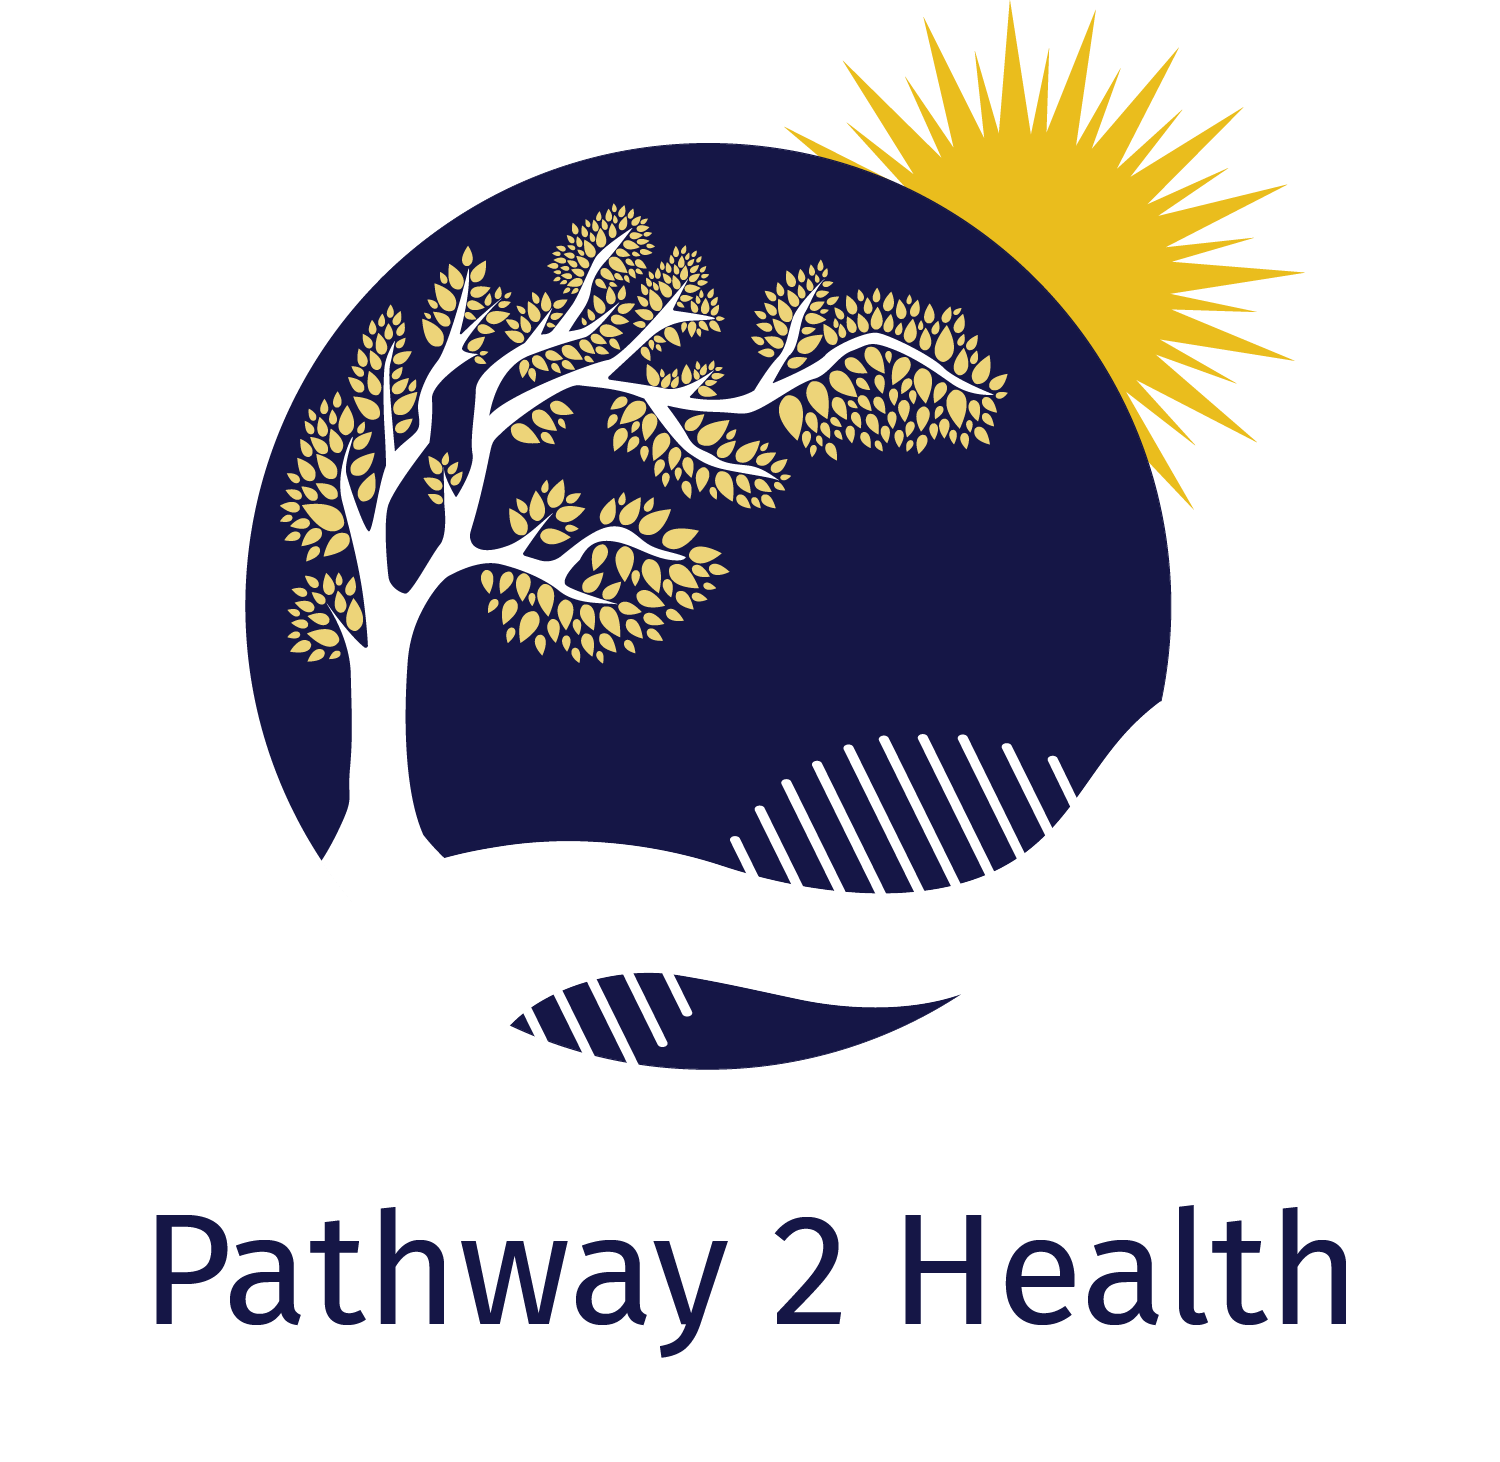 Pathway 2 Health